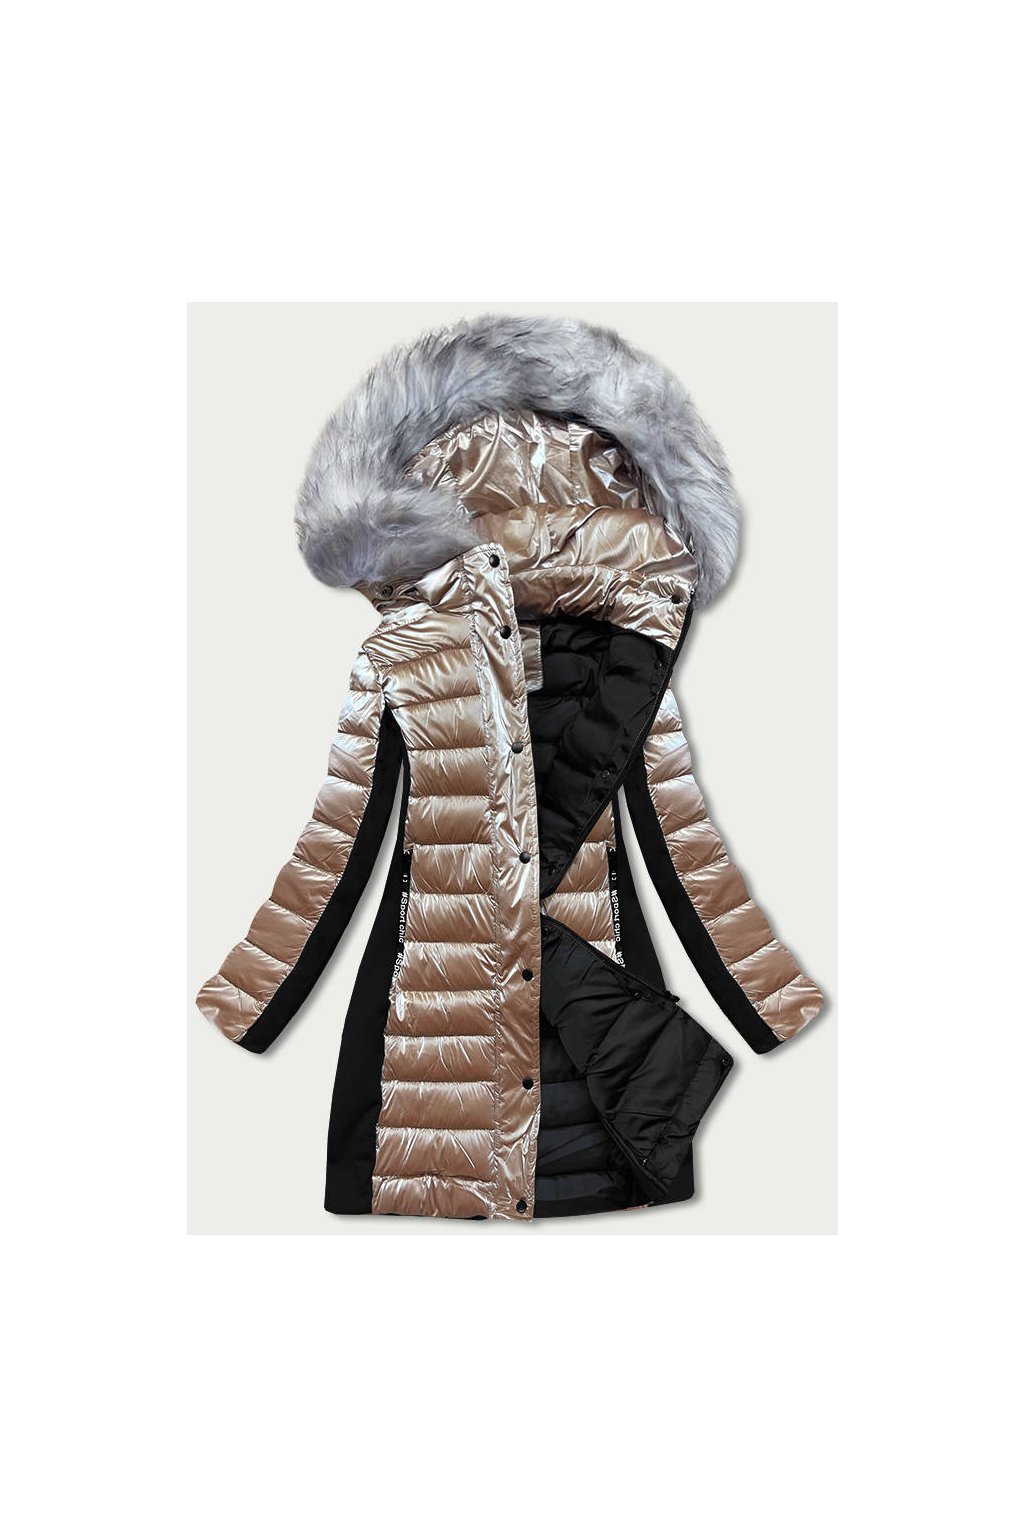 Dámska dlhá zimná bunda s kapucňou DK067 béžová